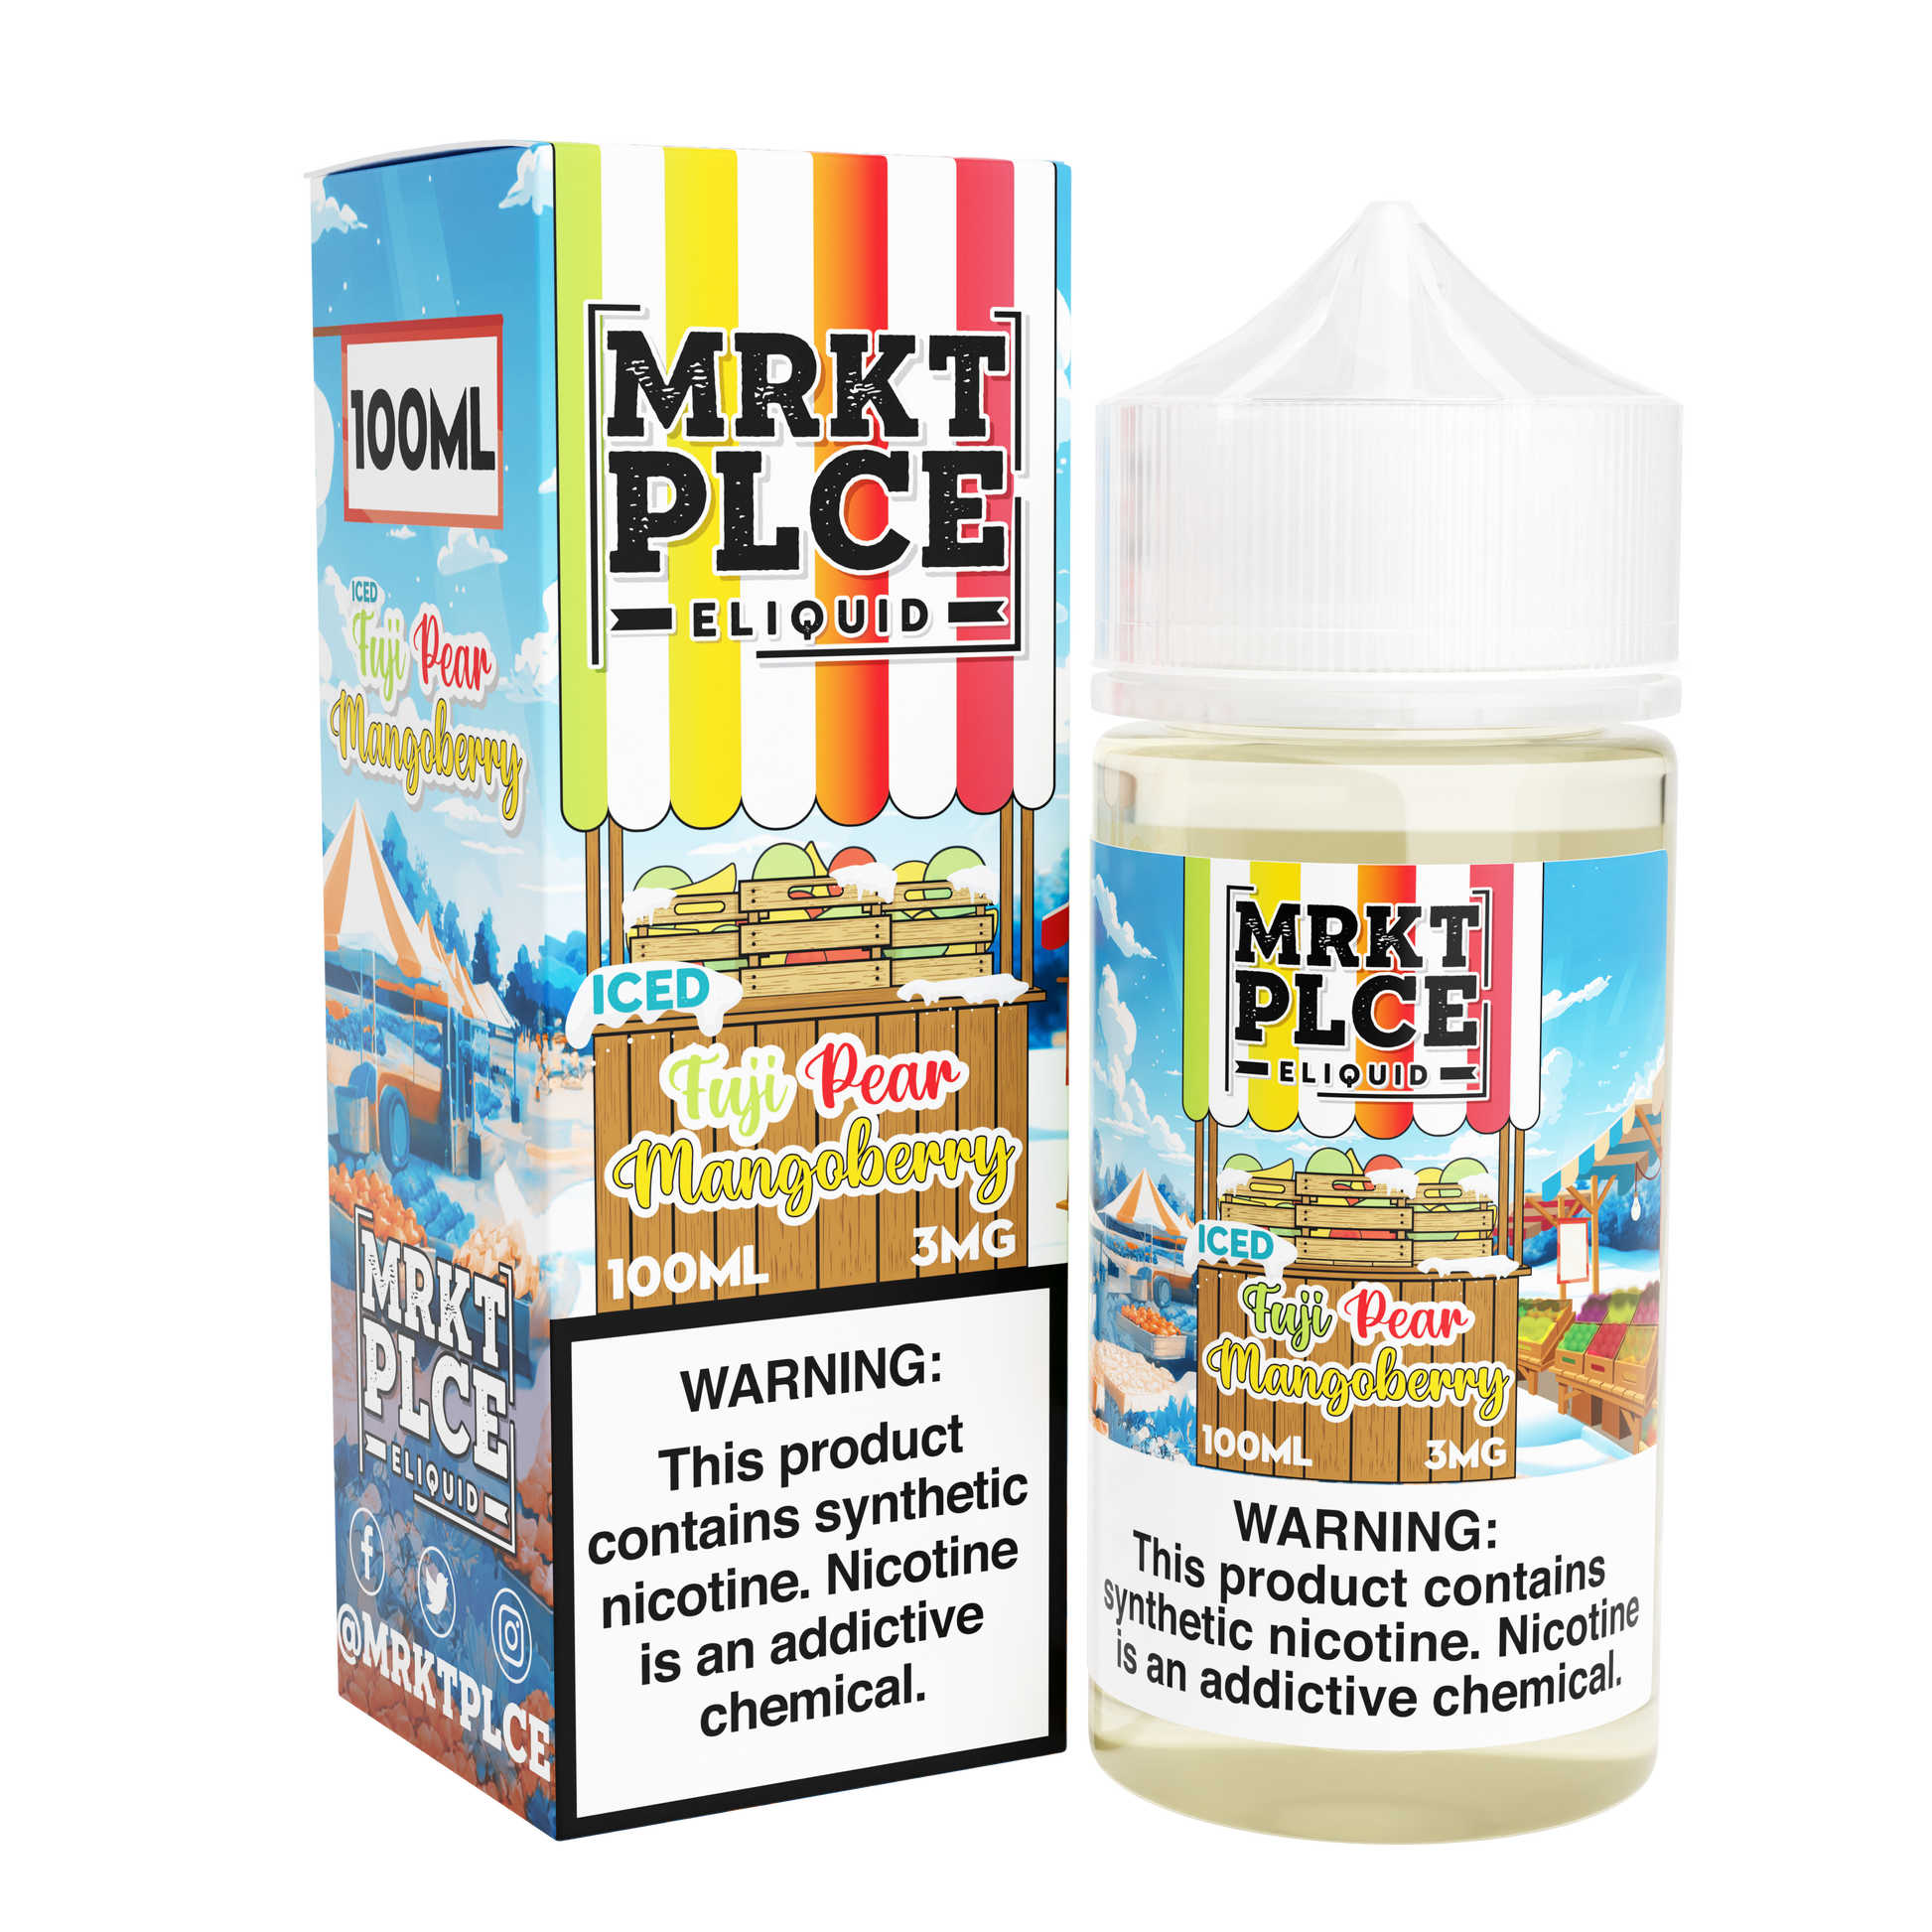 MRKT PLCE Series E-Liquid 100mL (Freebase) | Fuji Pear Mangoberry Iced with packaging